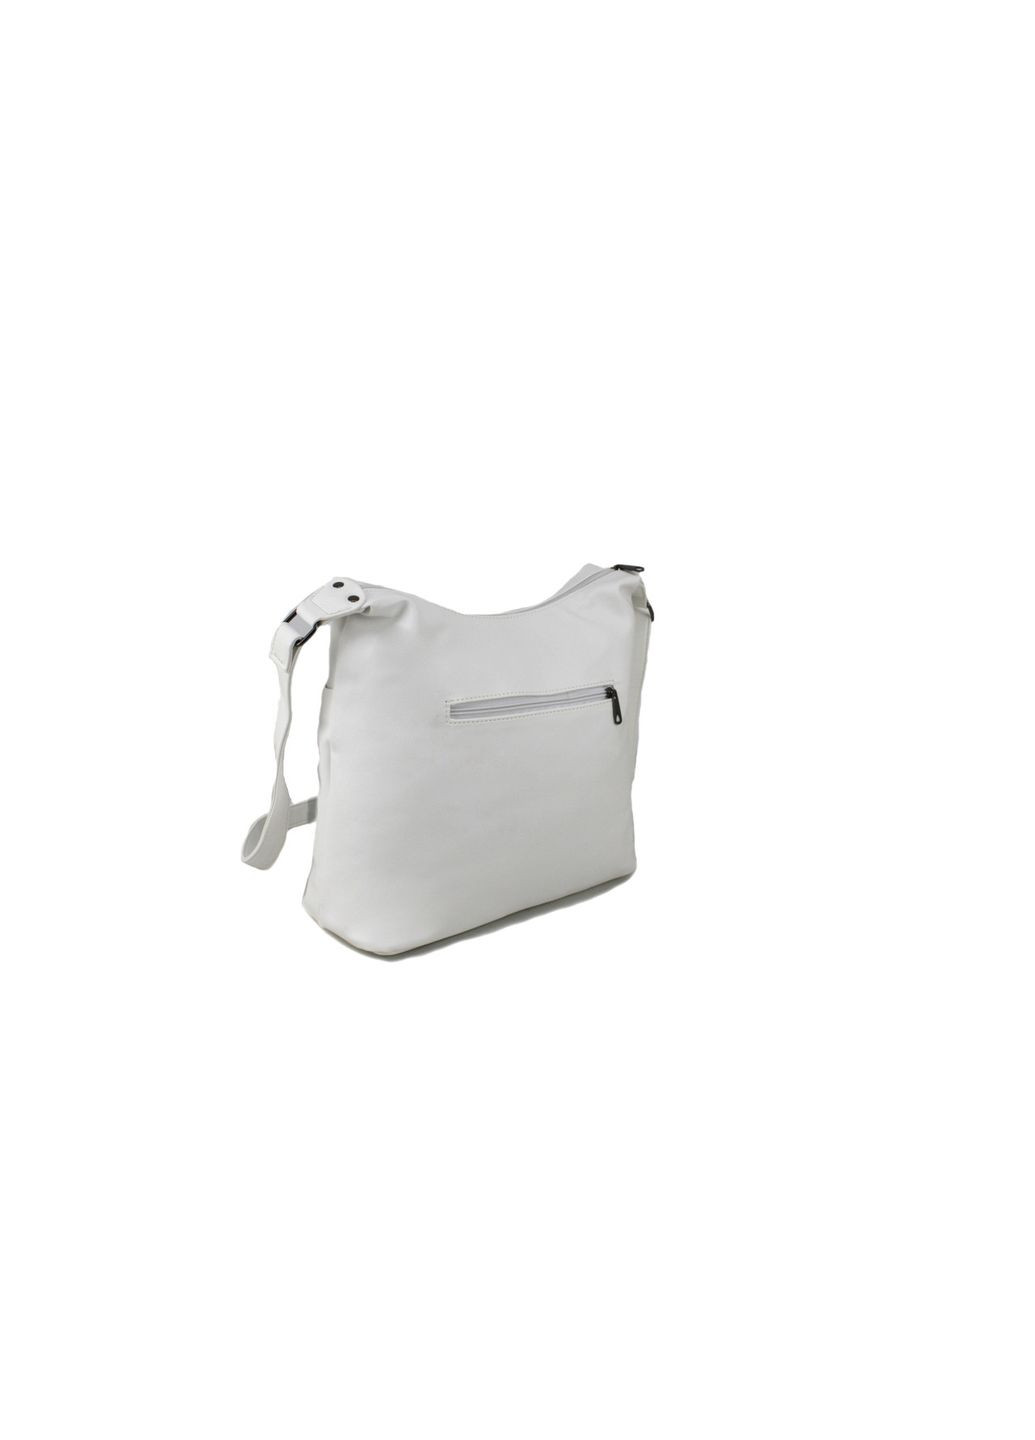 Повсякденна жіноча сумка 63130 біла Voila (290193726)